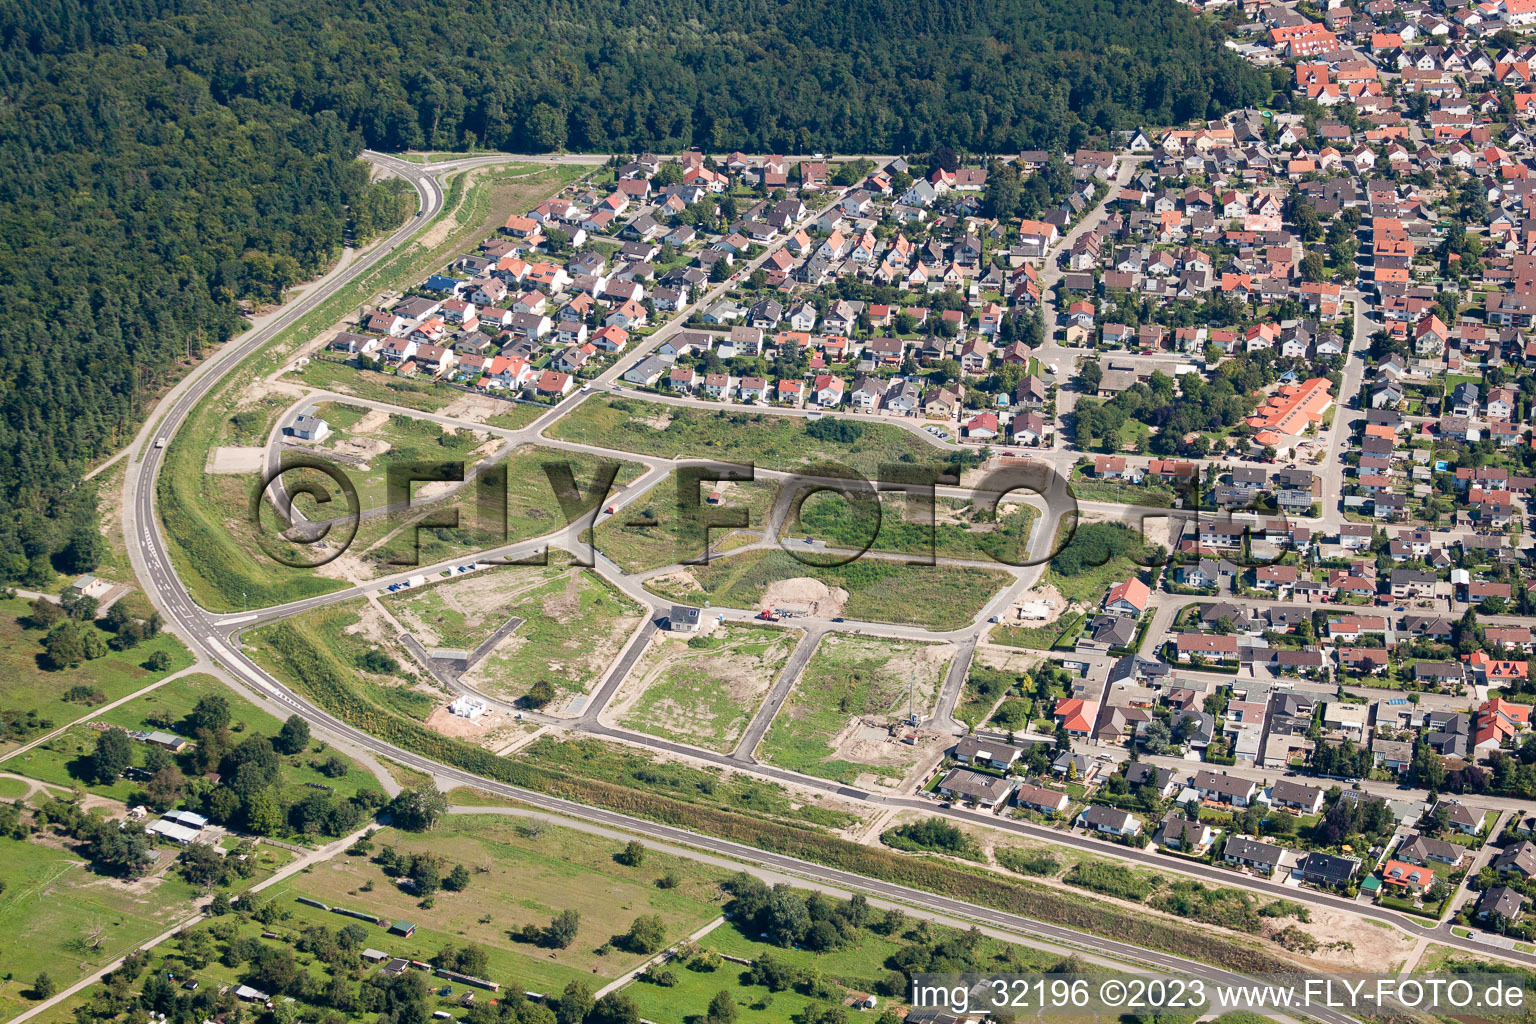 New development area W in Jockgrim in the state Rhineland-Palatinate, Germany